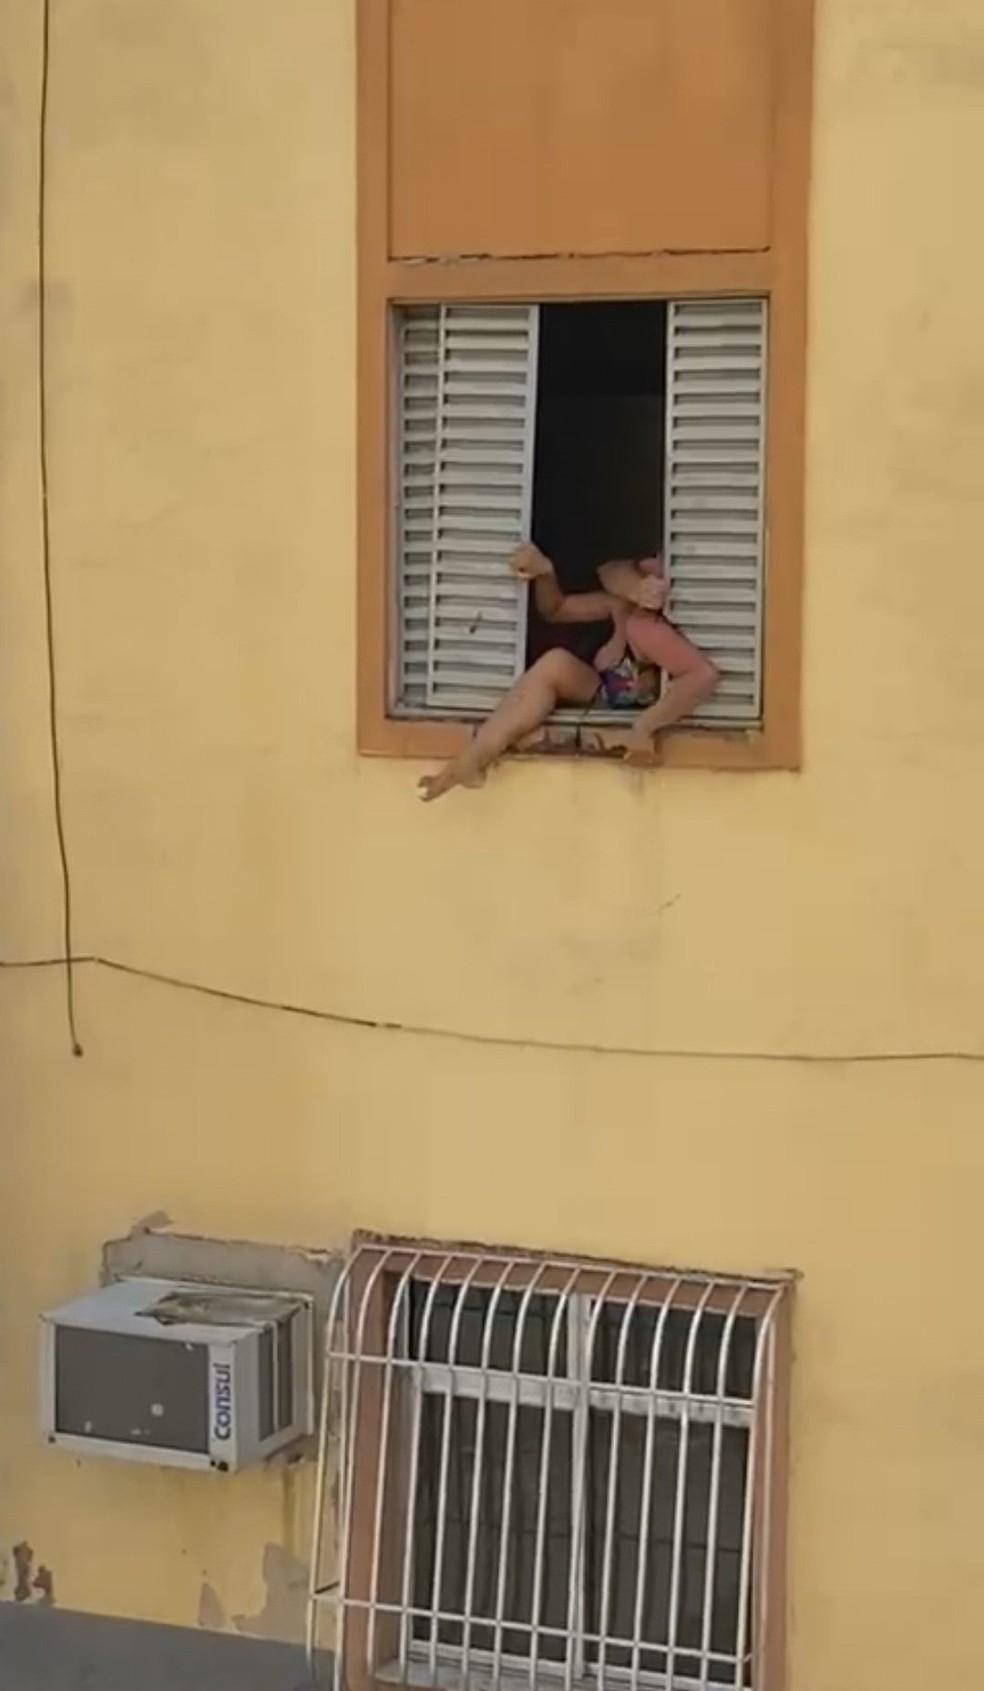 Maria Jos foi filmada tentando pular a janela do segundo andar durante a briga Foto Reproduorede social